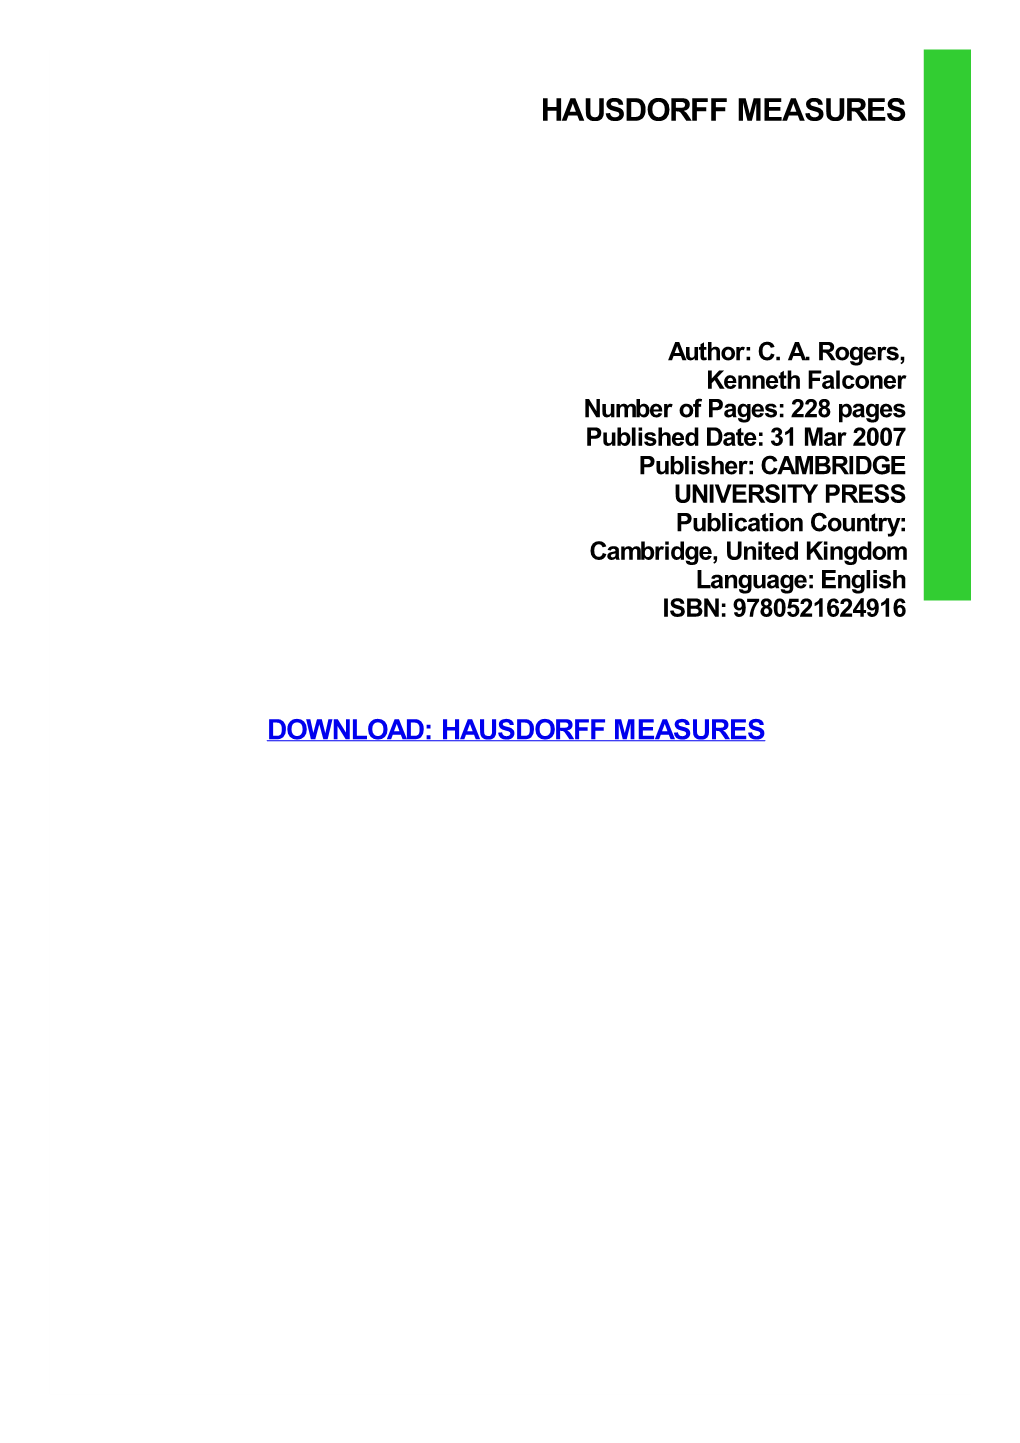 Hausdorff Measures Download Free